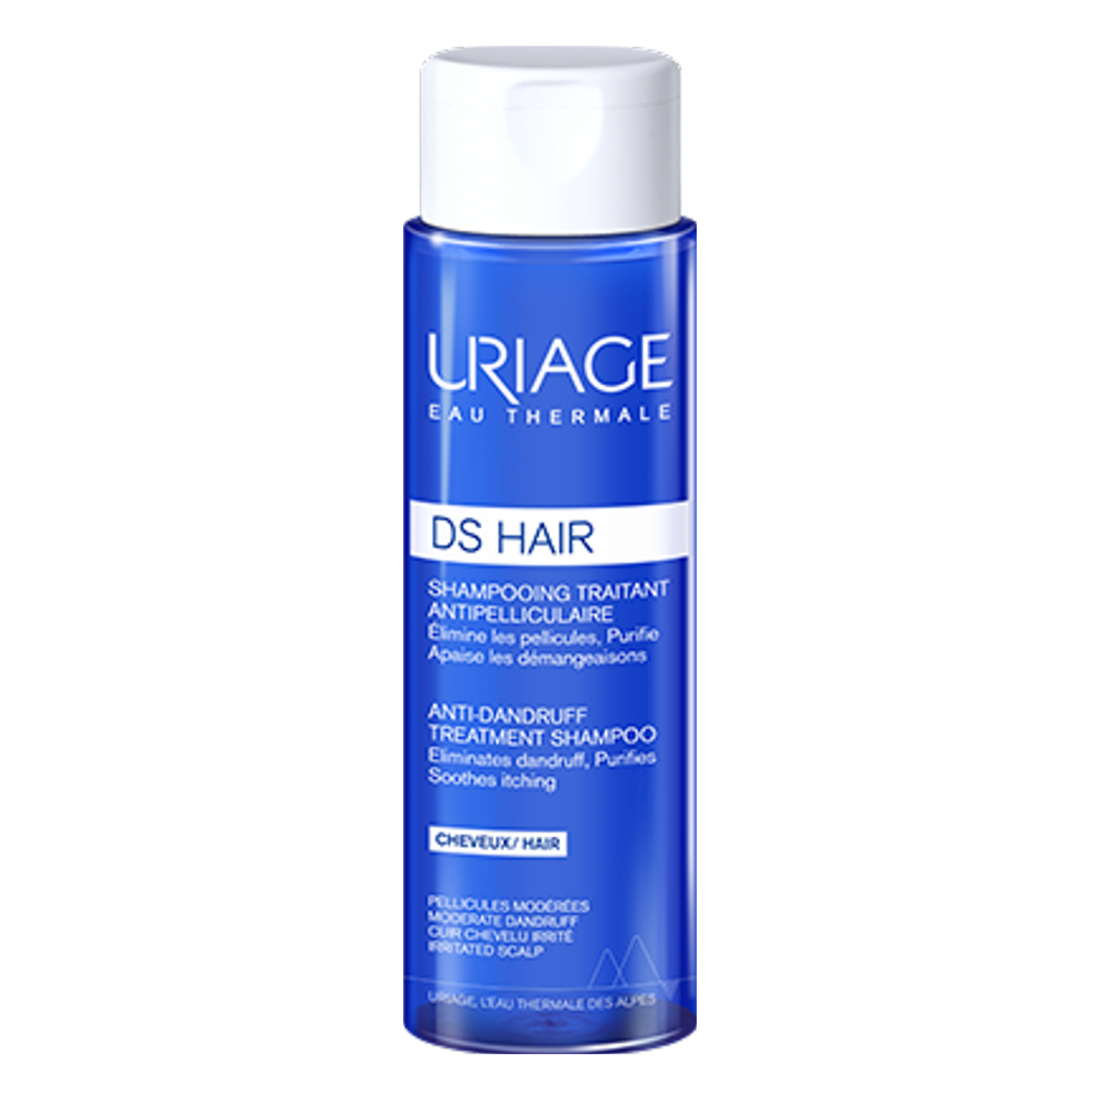 DS Hair Shampooing Traitant Antipelliculaire - 200 ml